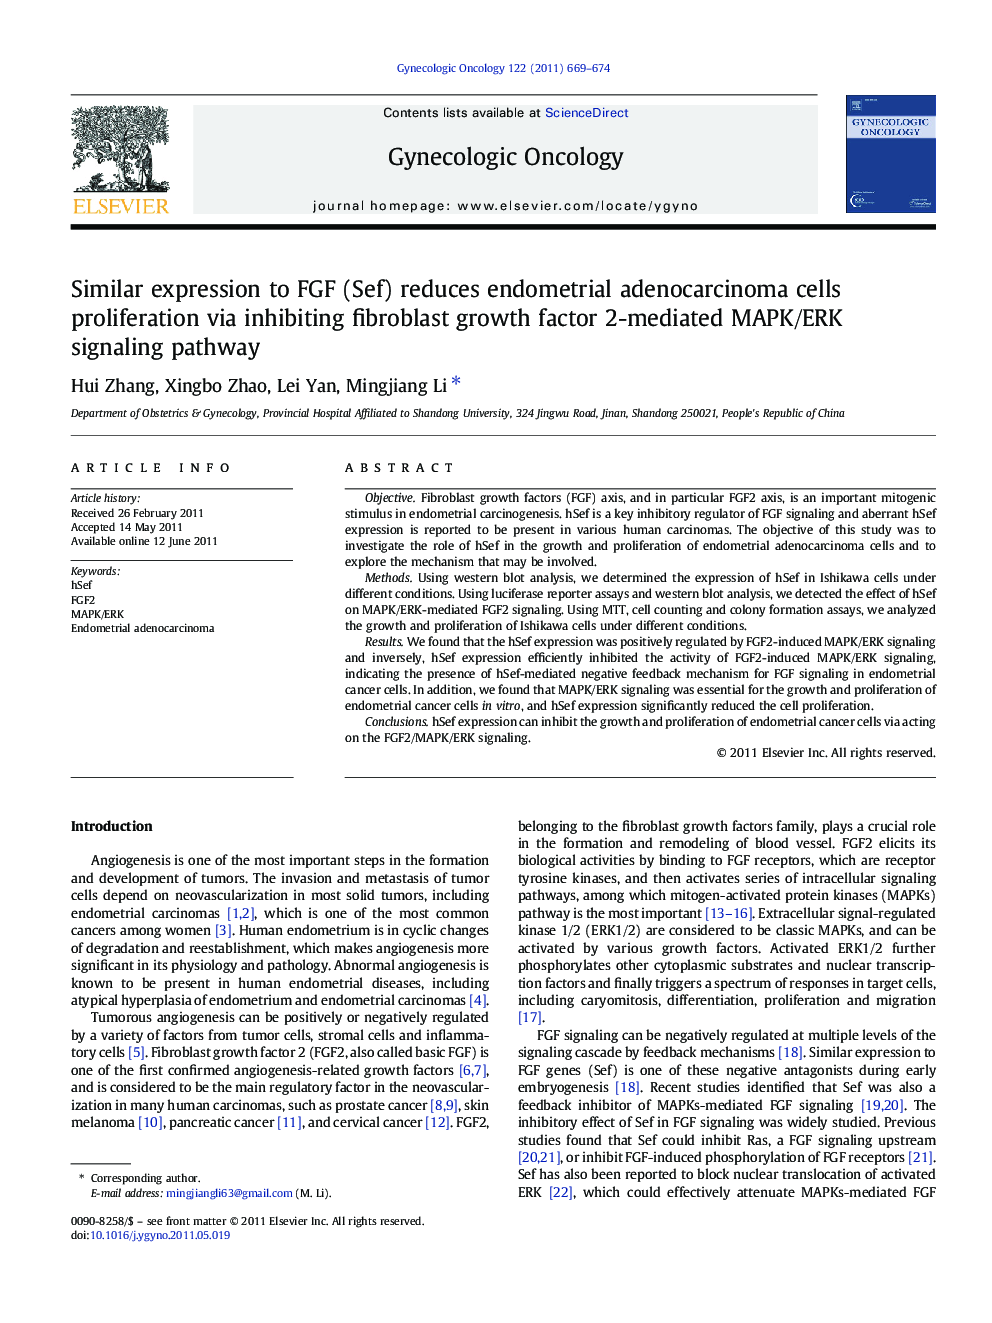 Similar expression to FGF (Sef) reduces endometrial adenocarcinoma cells proliferation via inhibiting fibroblast growth factor 2-mediated MAPK/ERK signaling pathway